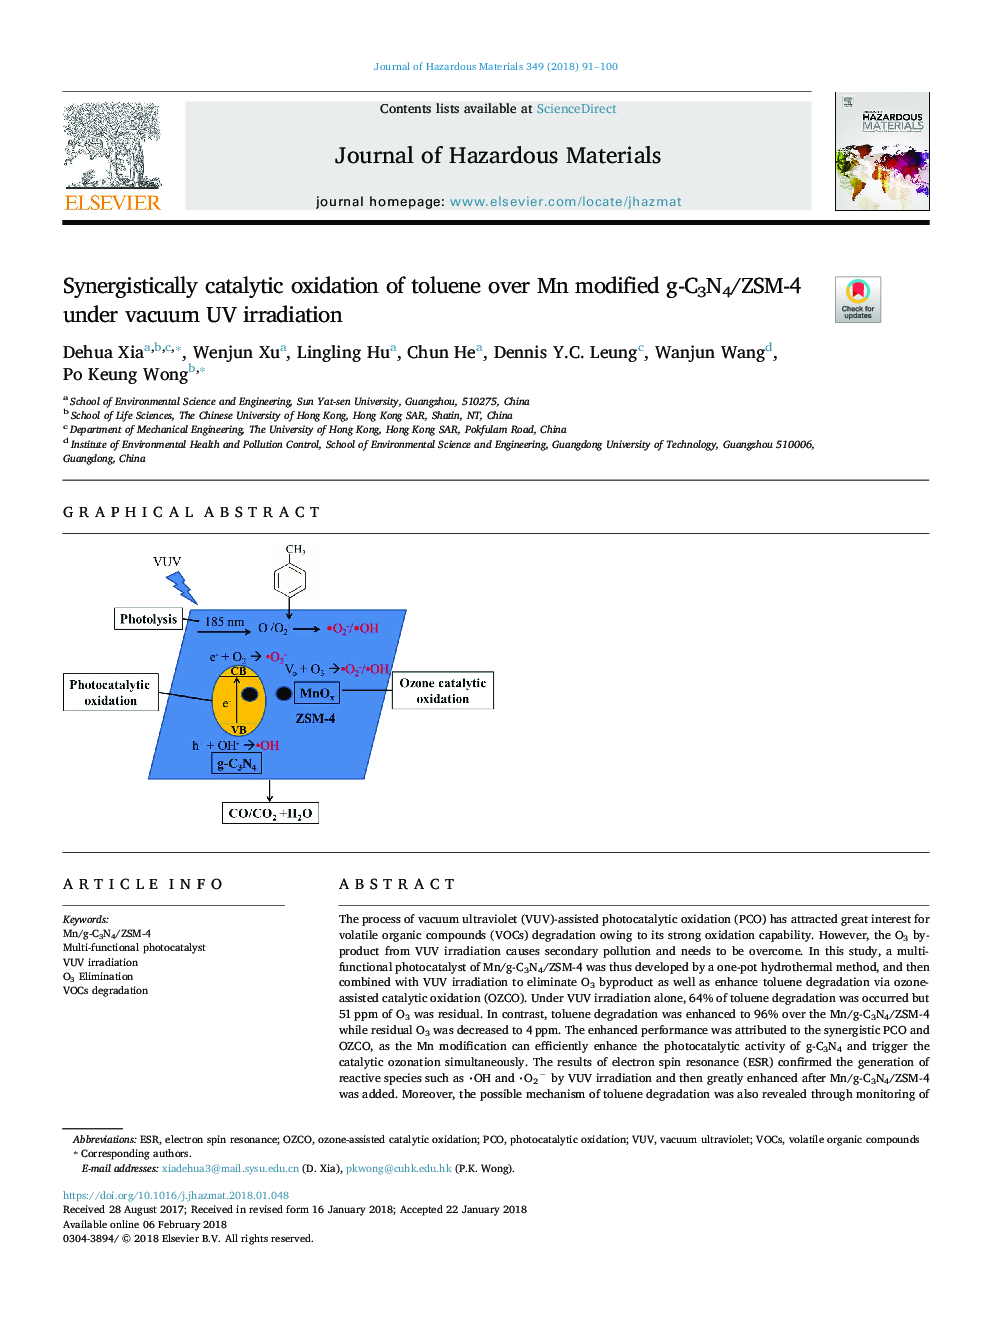 Synergistically catalytic oxidation of toluene over Mn modified g-C3N4/ZSM-4 under vacuum UV irradiation